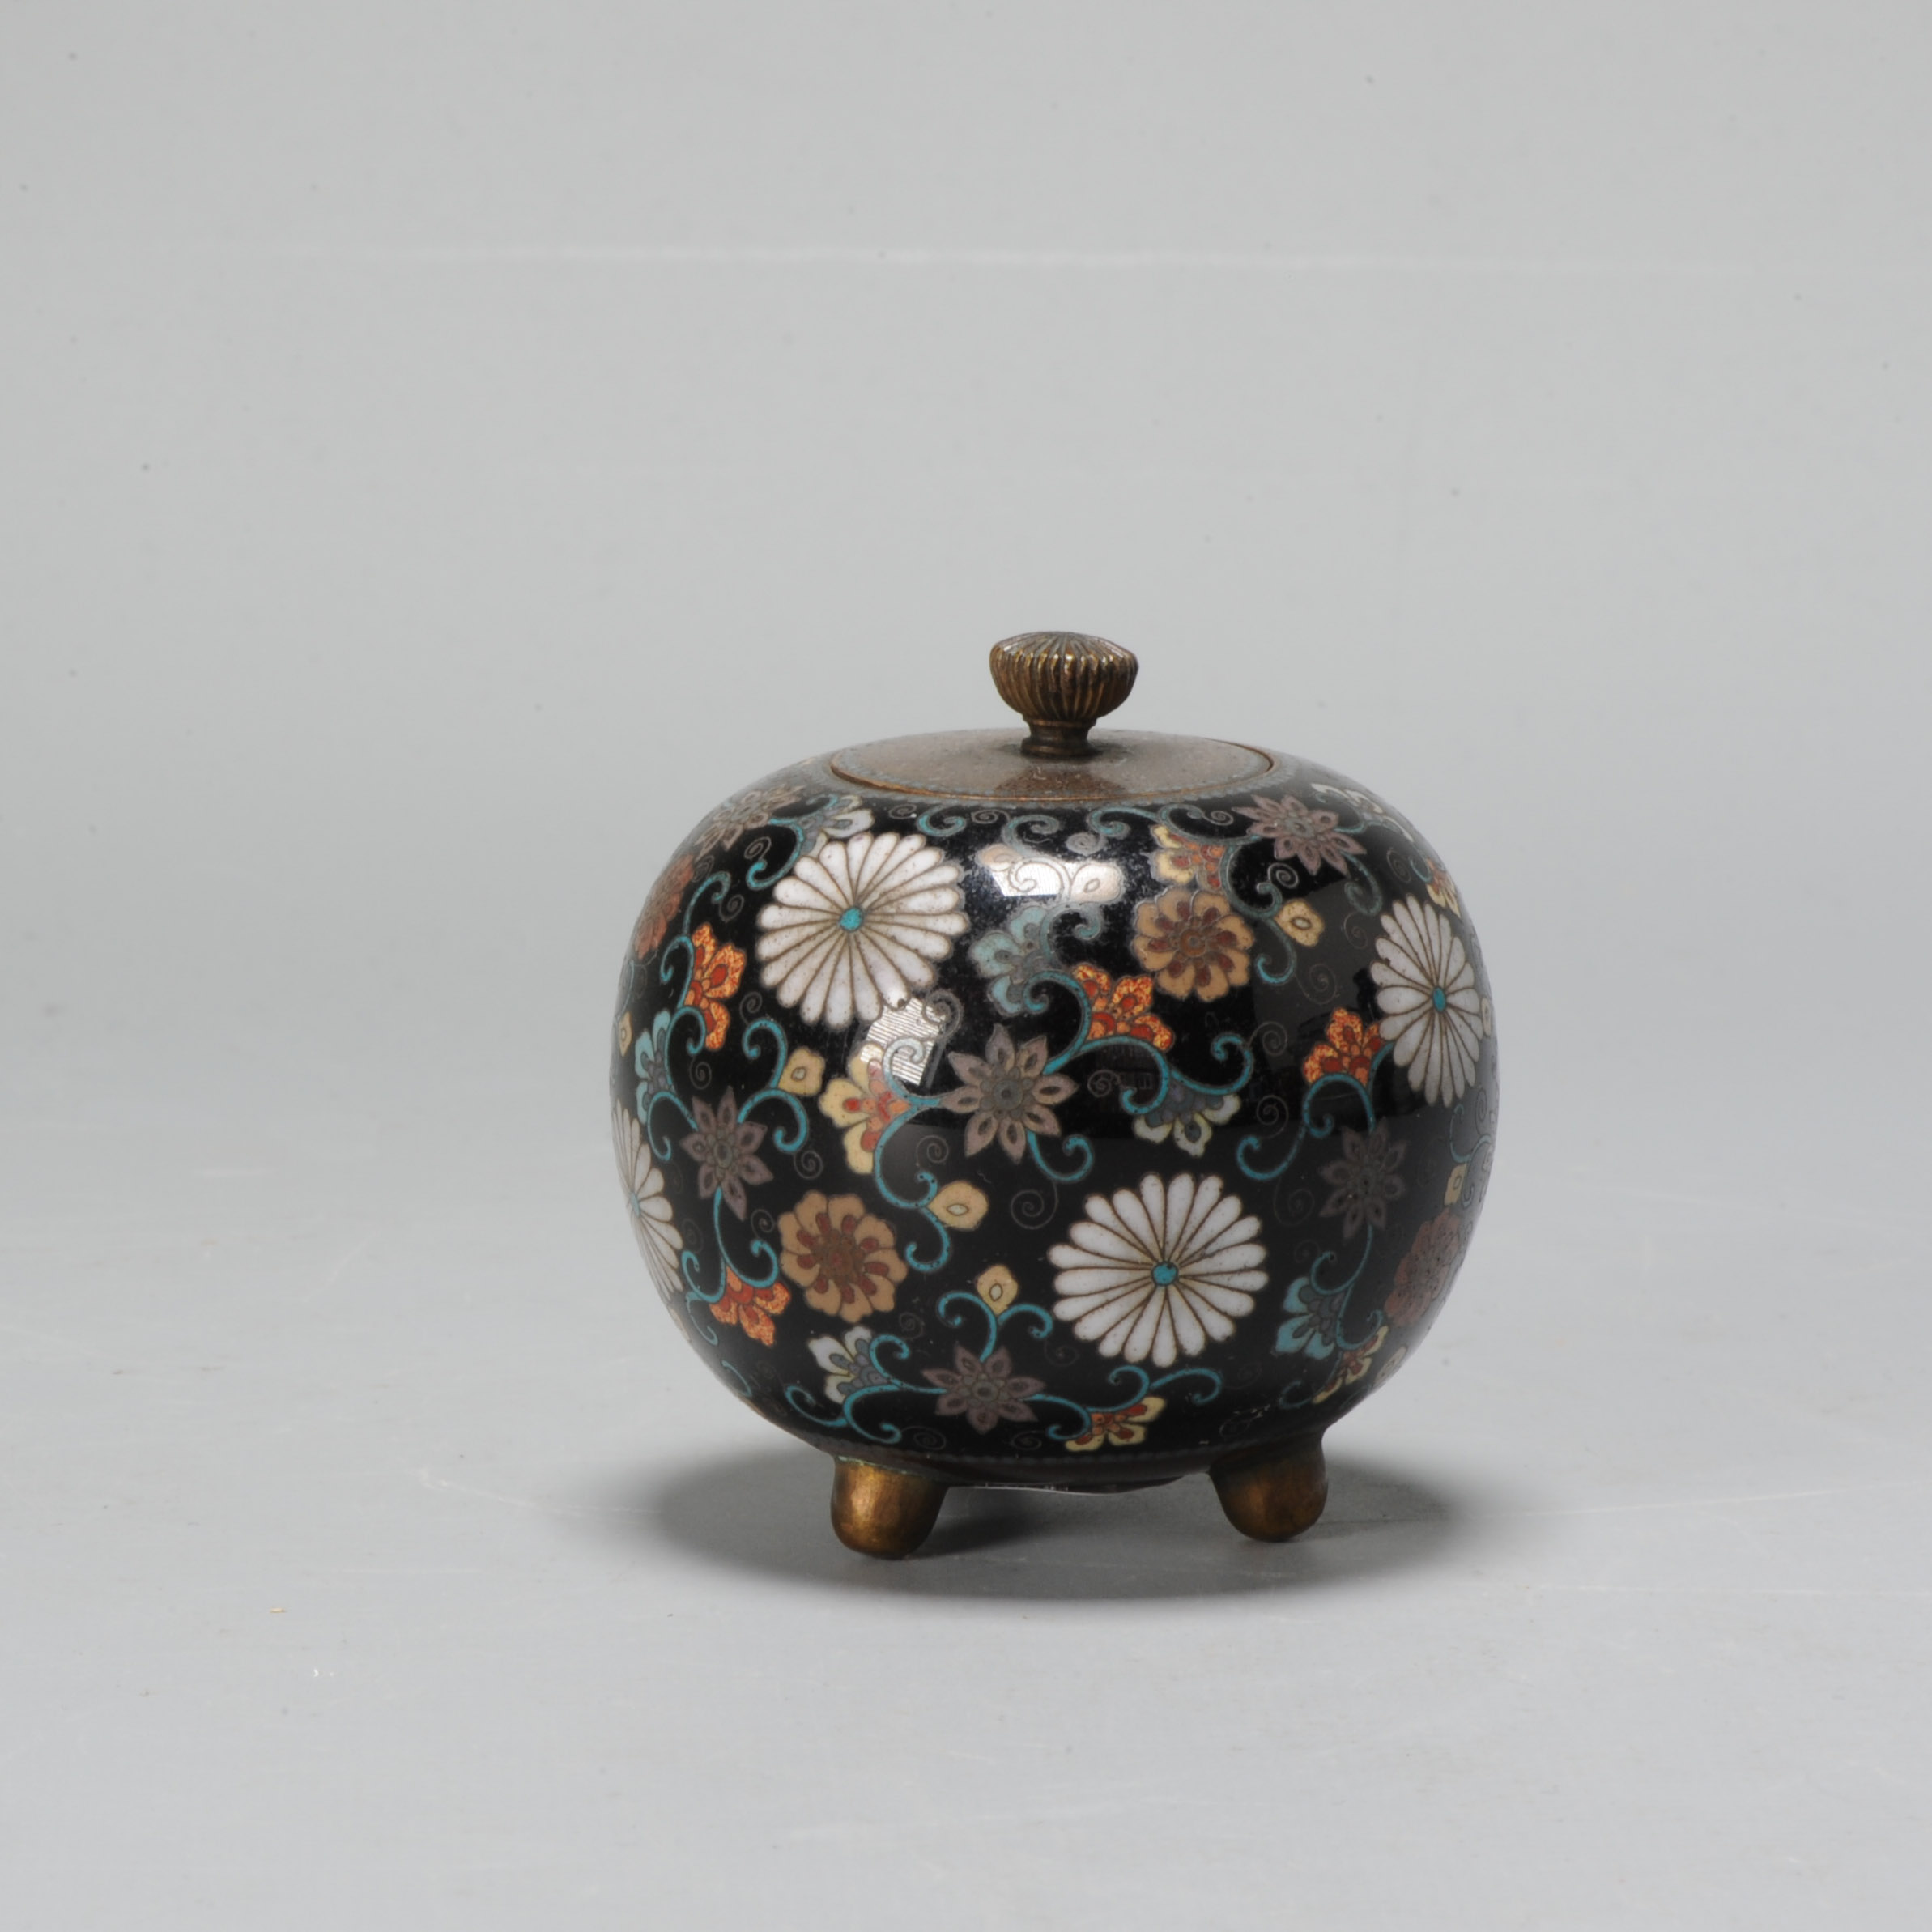 A Small round cloisonné enamel Jarlet for Incense Meiji era (1868-1912)